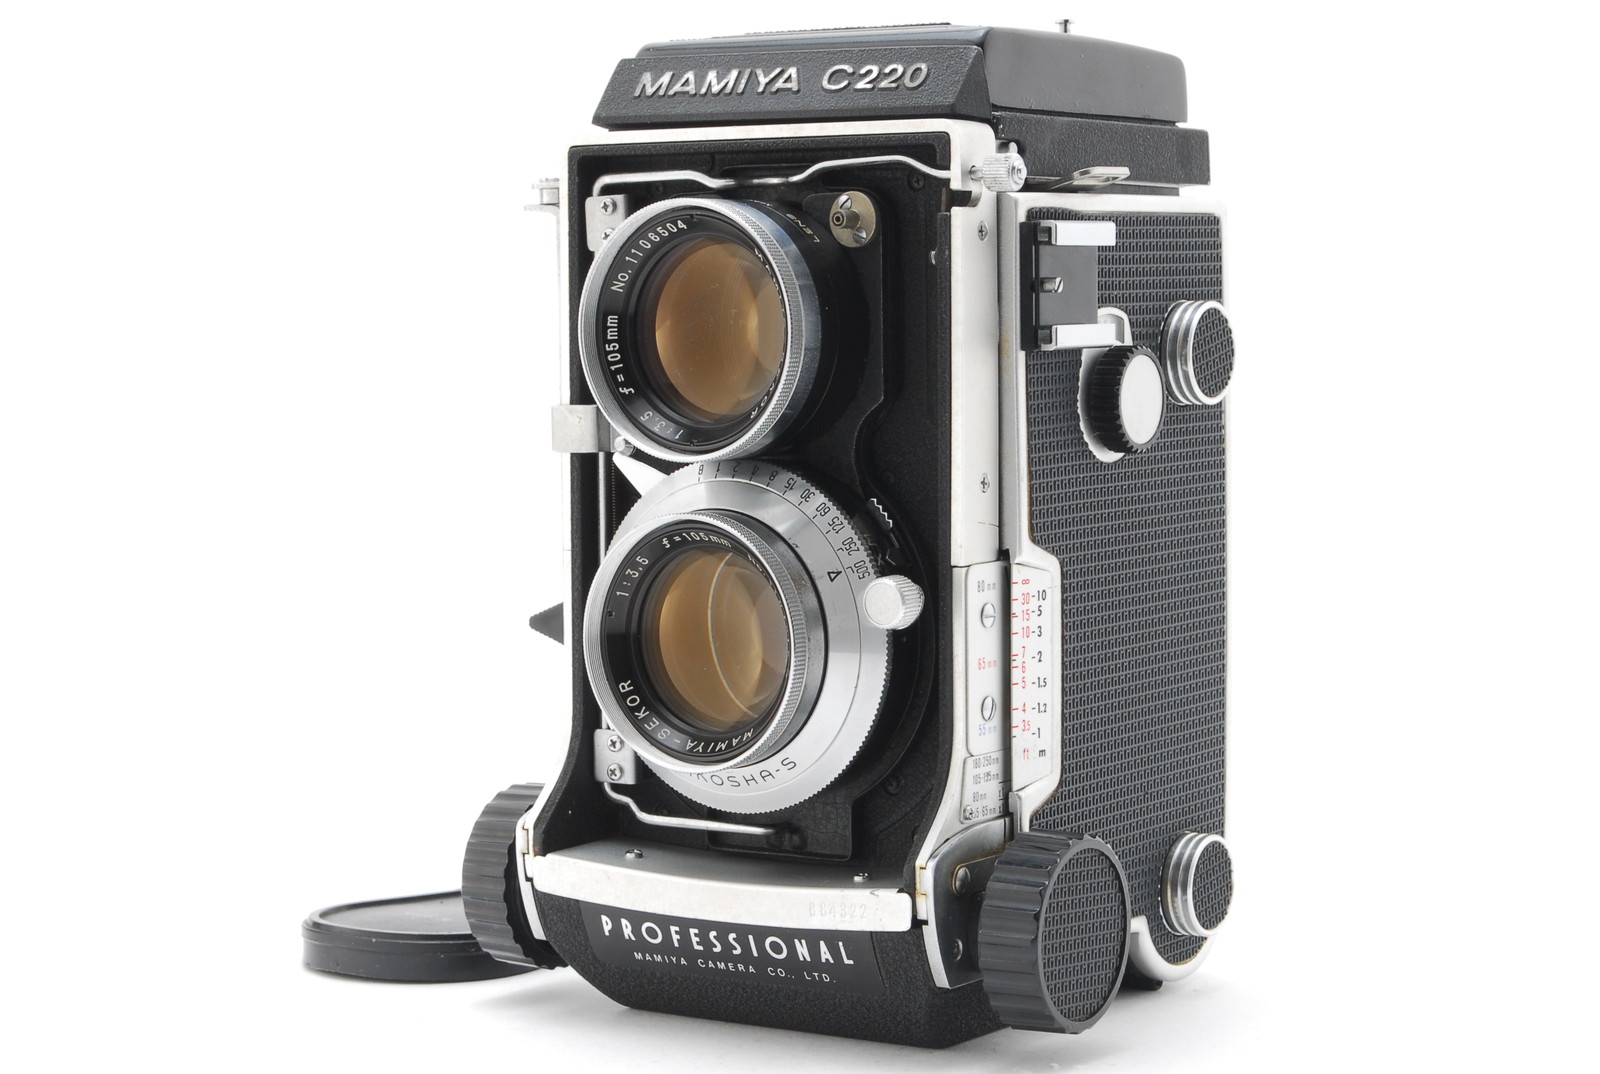 PROMOTION.NEAR MINT MAMIYA C220 PROFESSIONAL TLR Film Camera, SEKOR 105mm f/3.5 from Japan